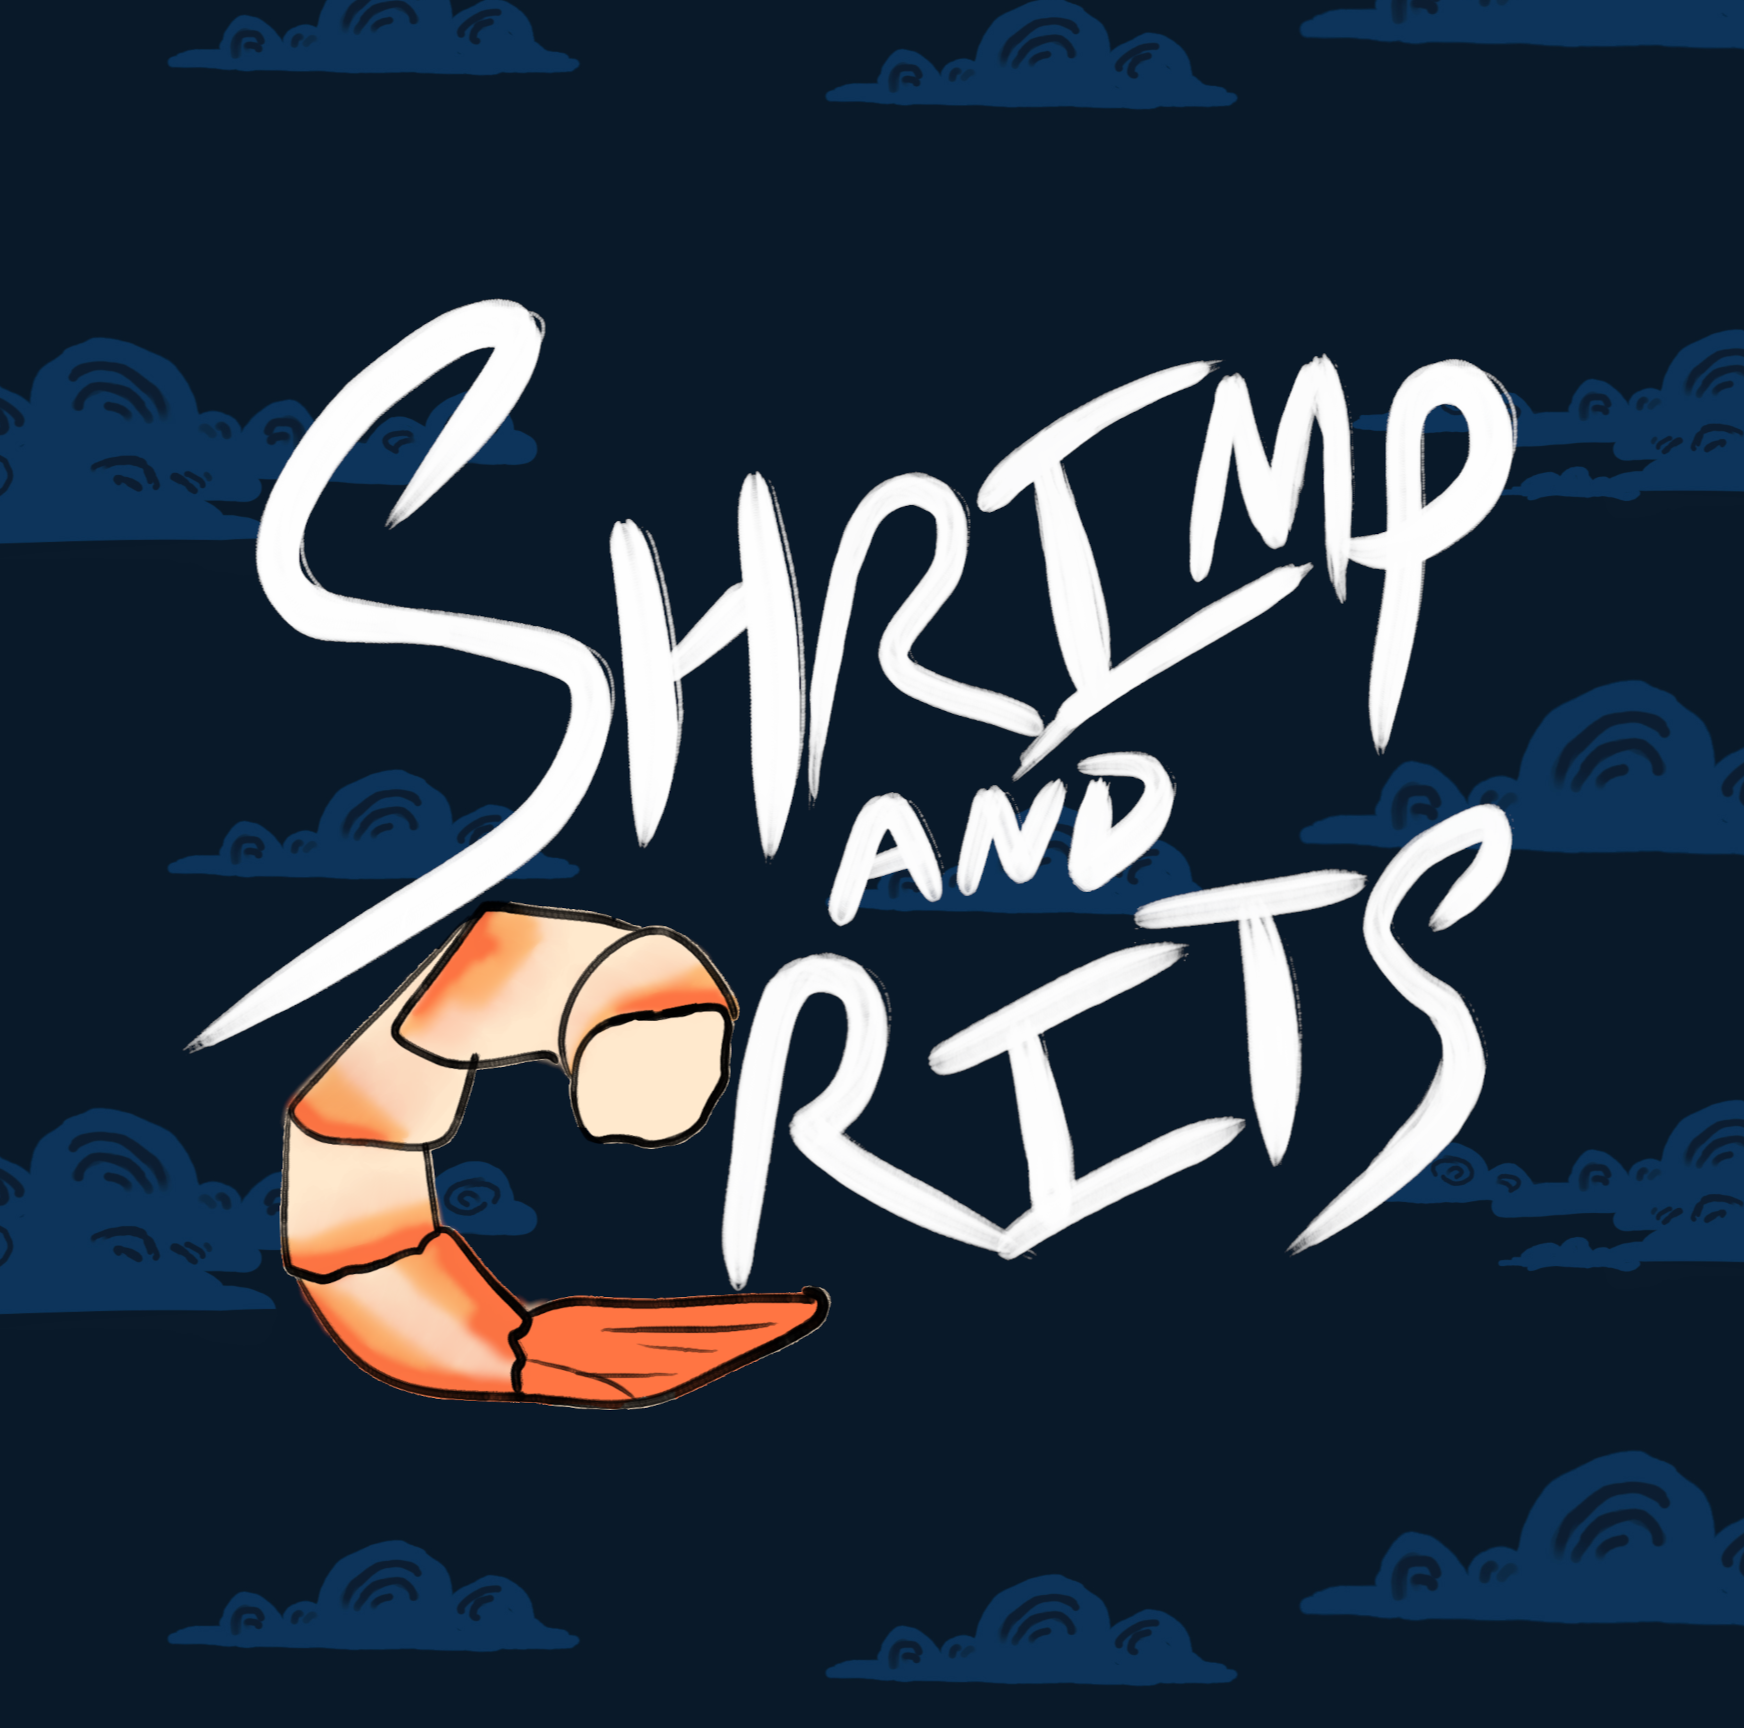 Shrimp and Crits